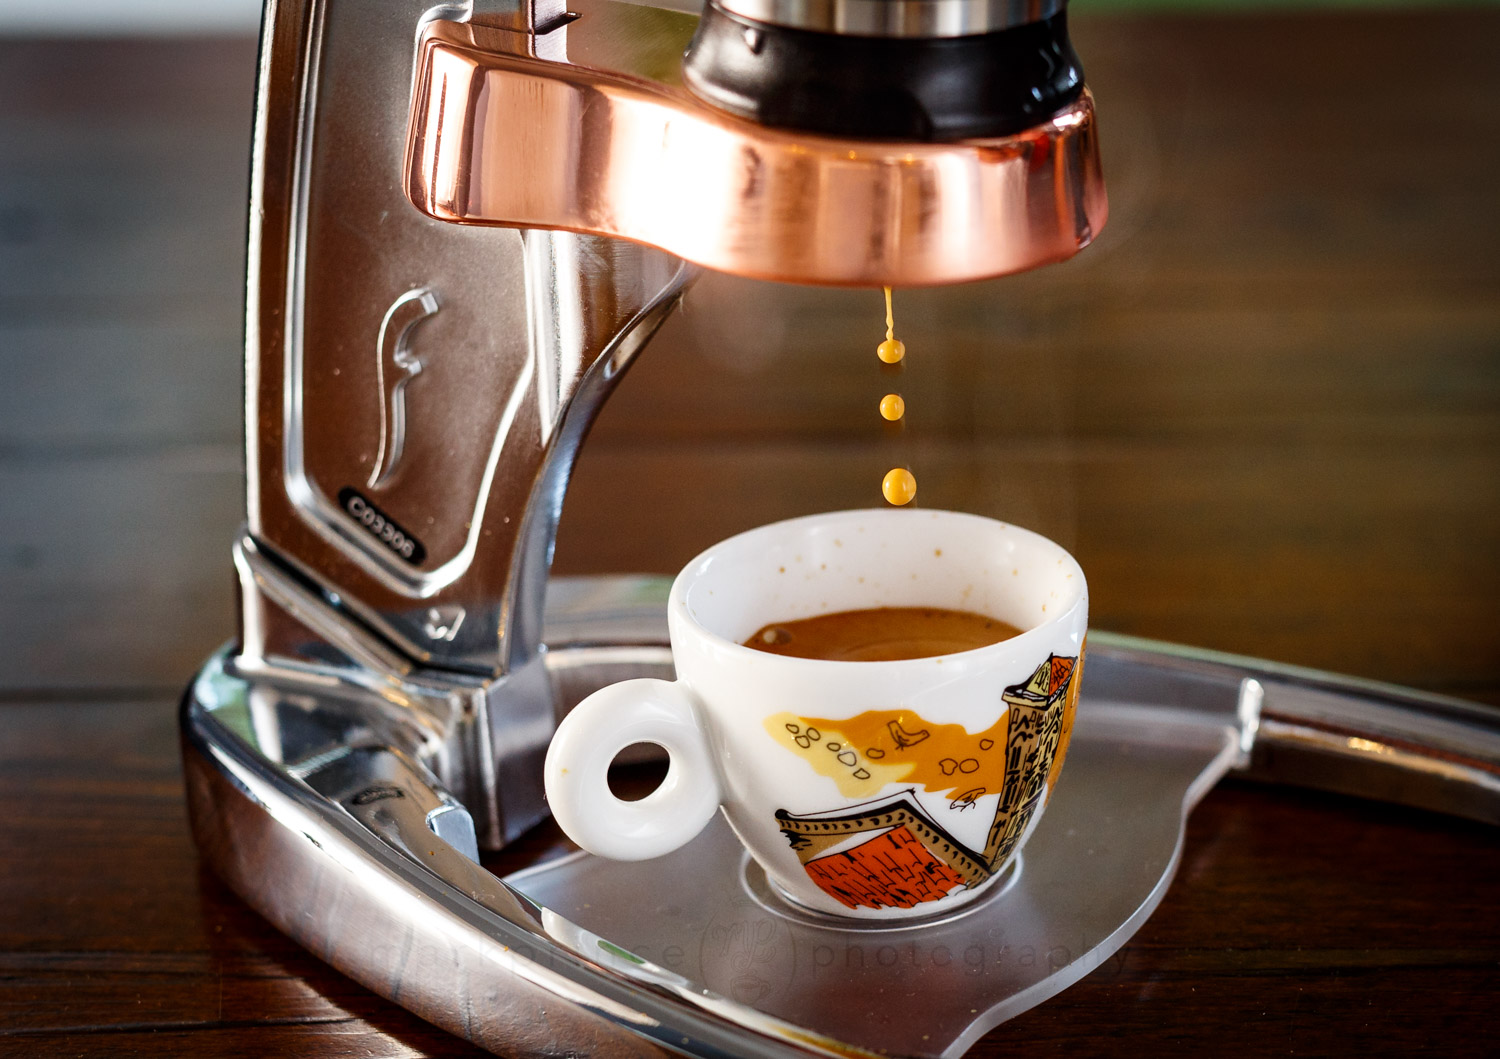 Flair Espresso Machine » CoffeeGeek